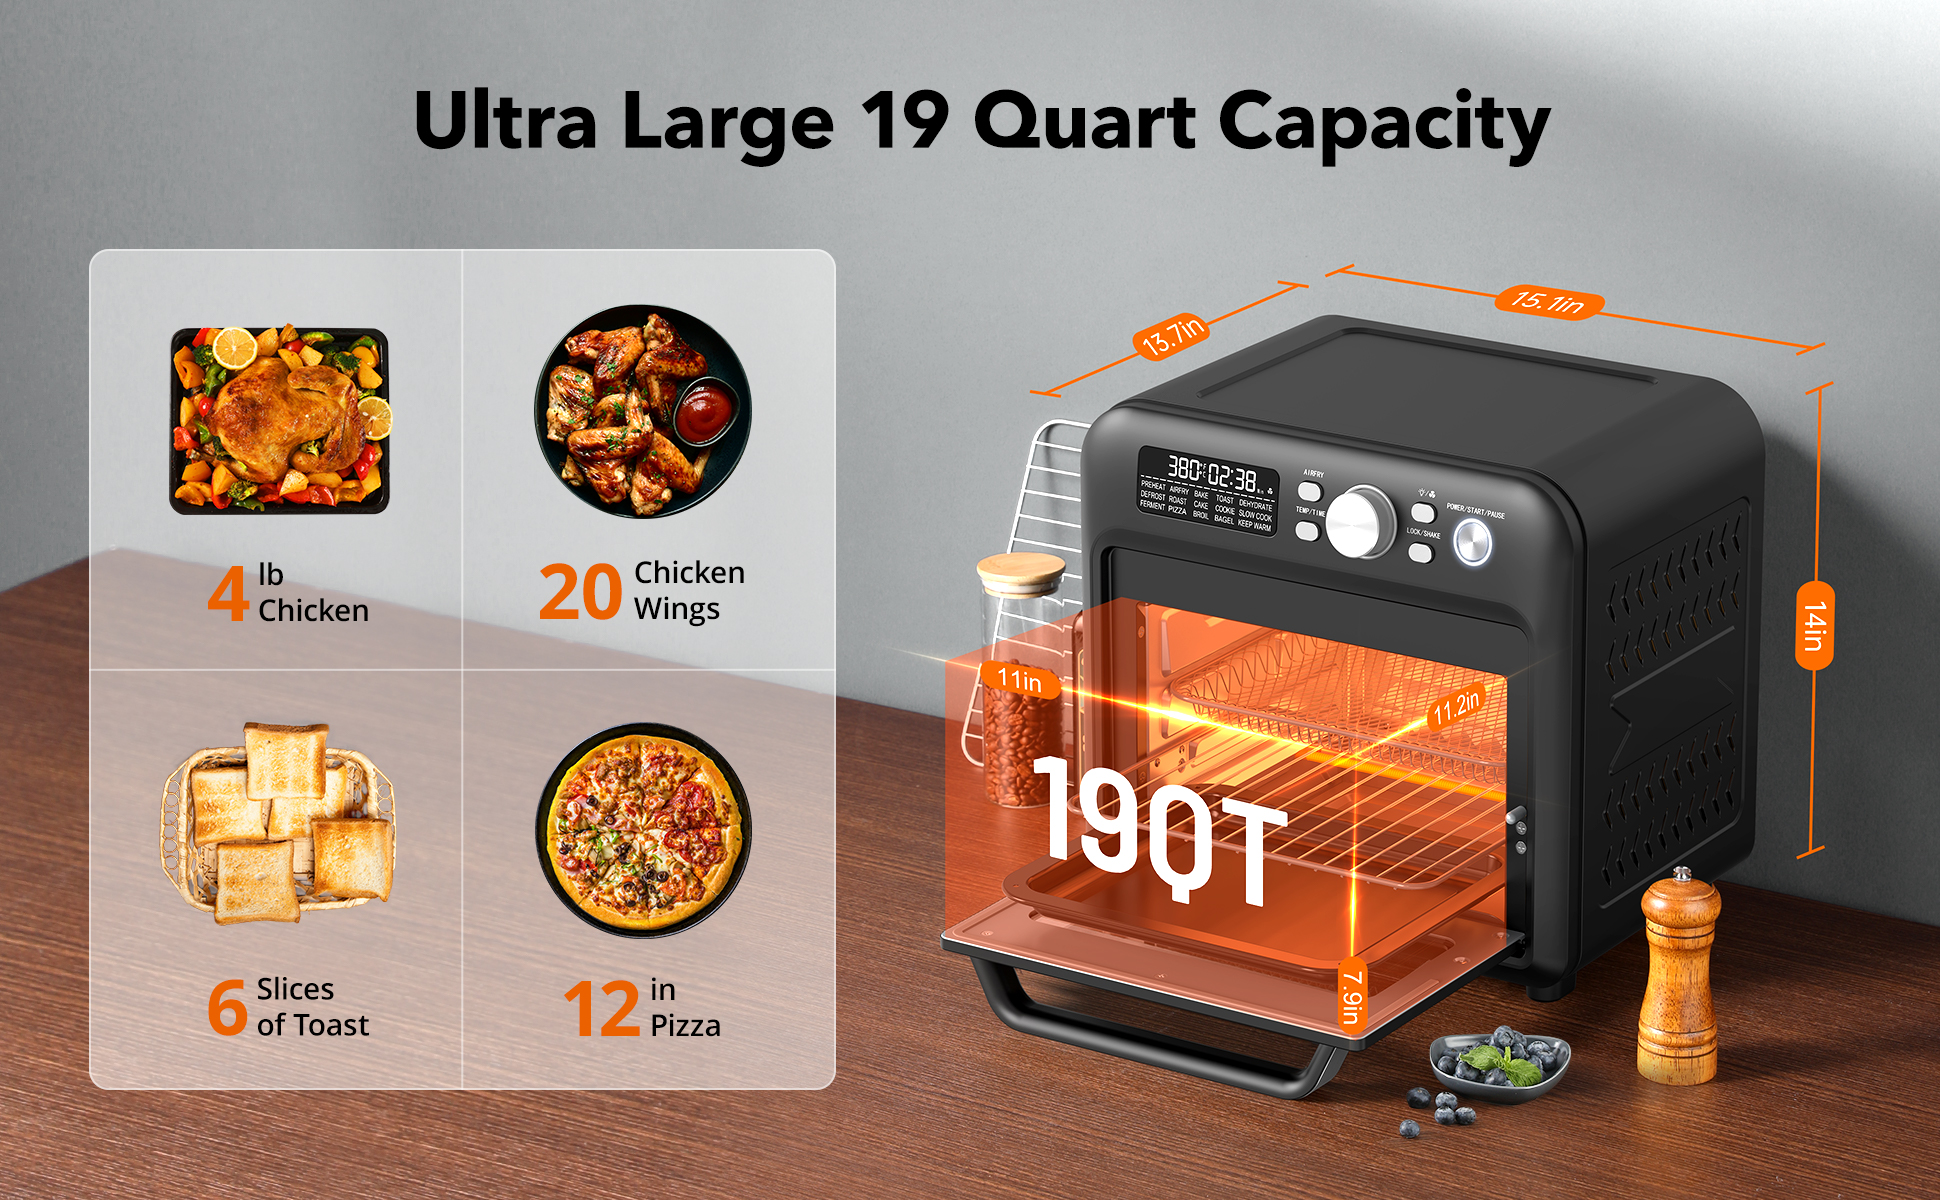 Ultra Large 19 Quart Capacity
